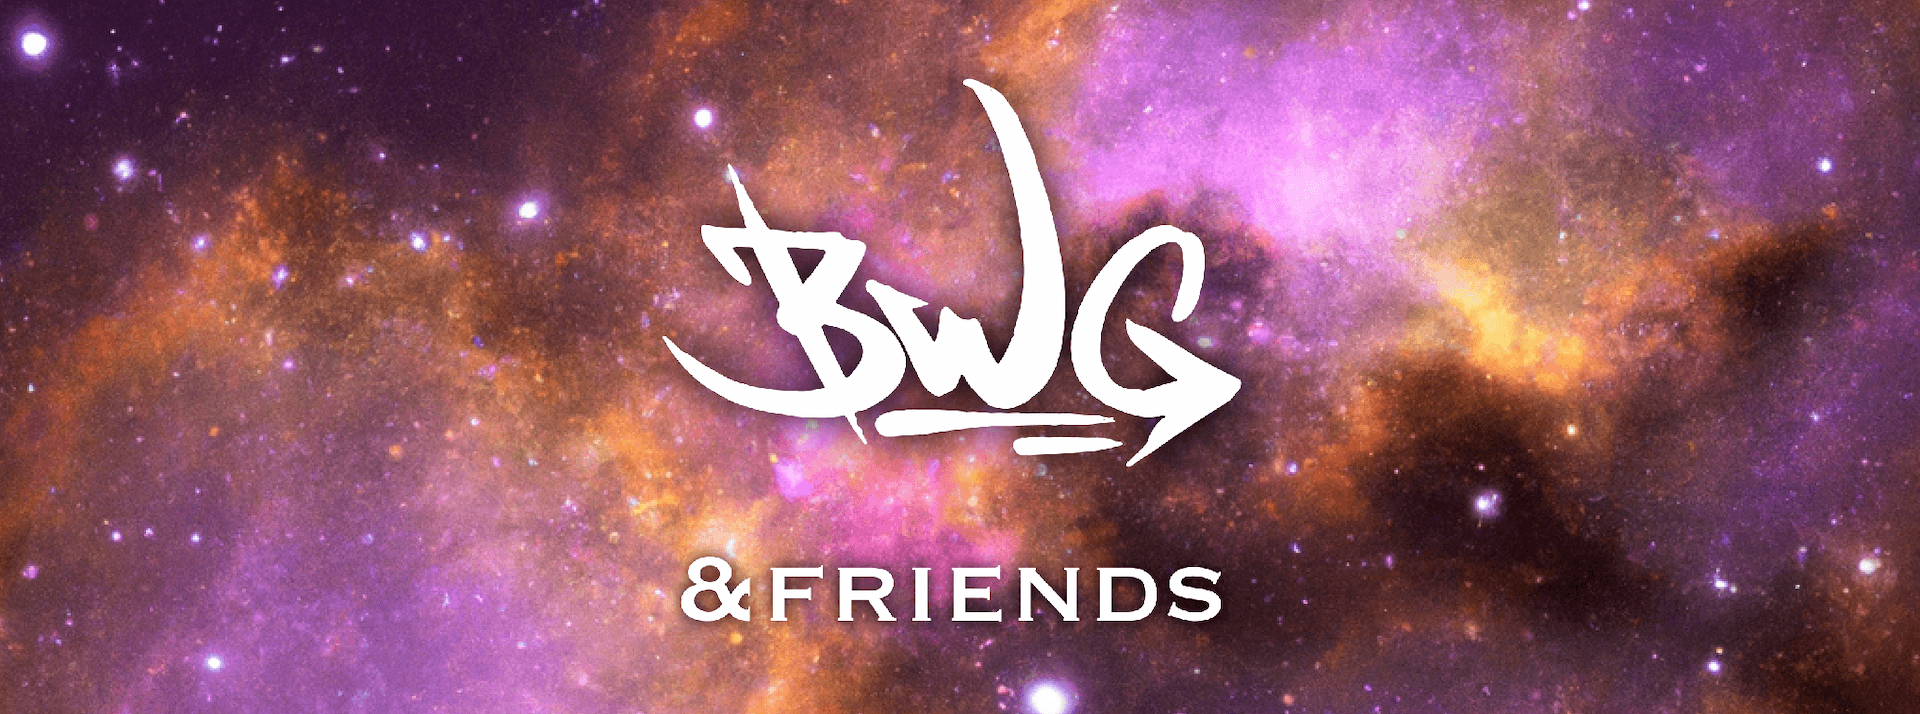 BWG & FRIENDS 2